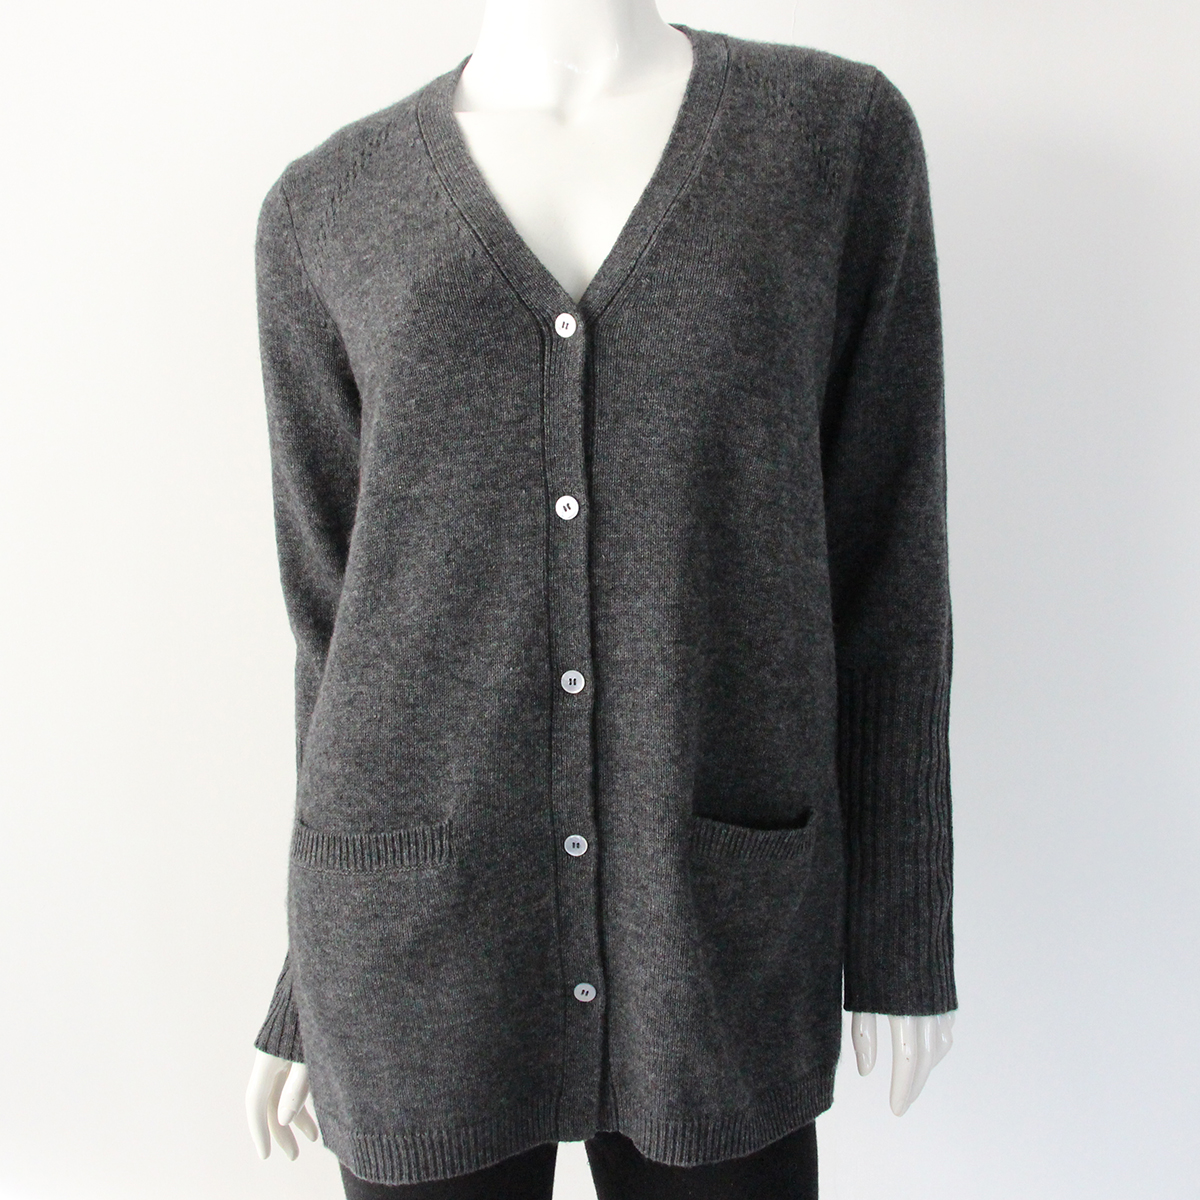 button cashmere cardigan sweater WYSE032